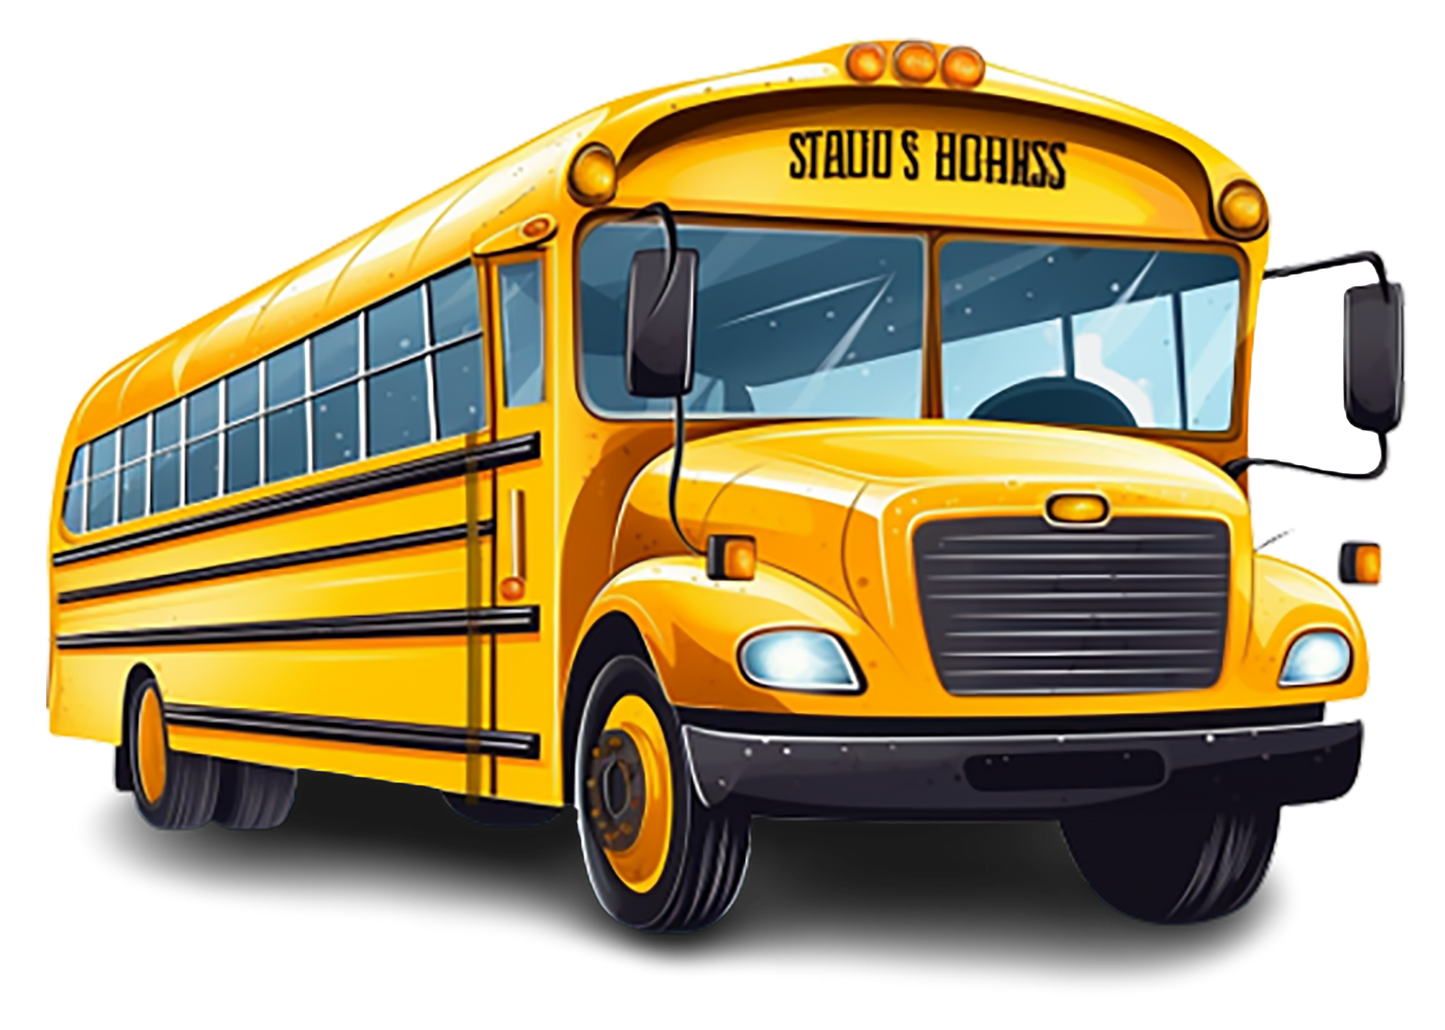 Gang Sheet with School Bus